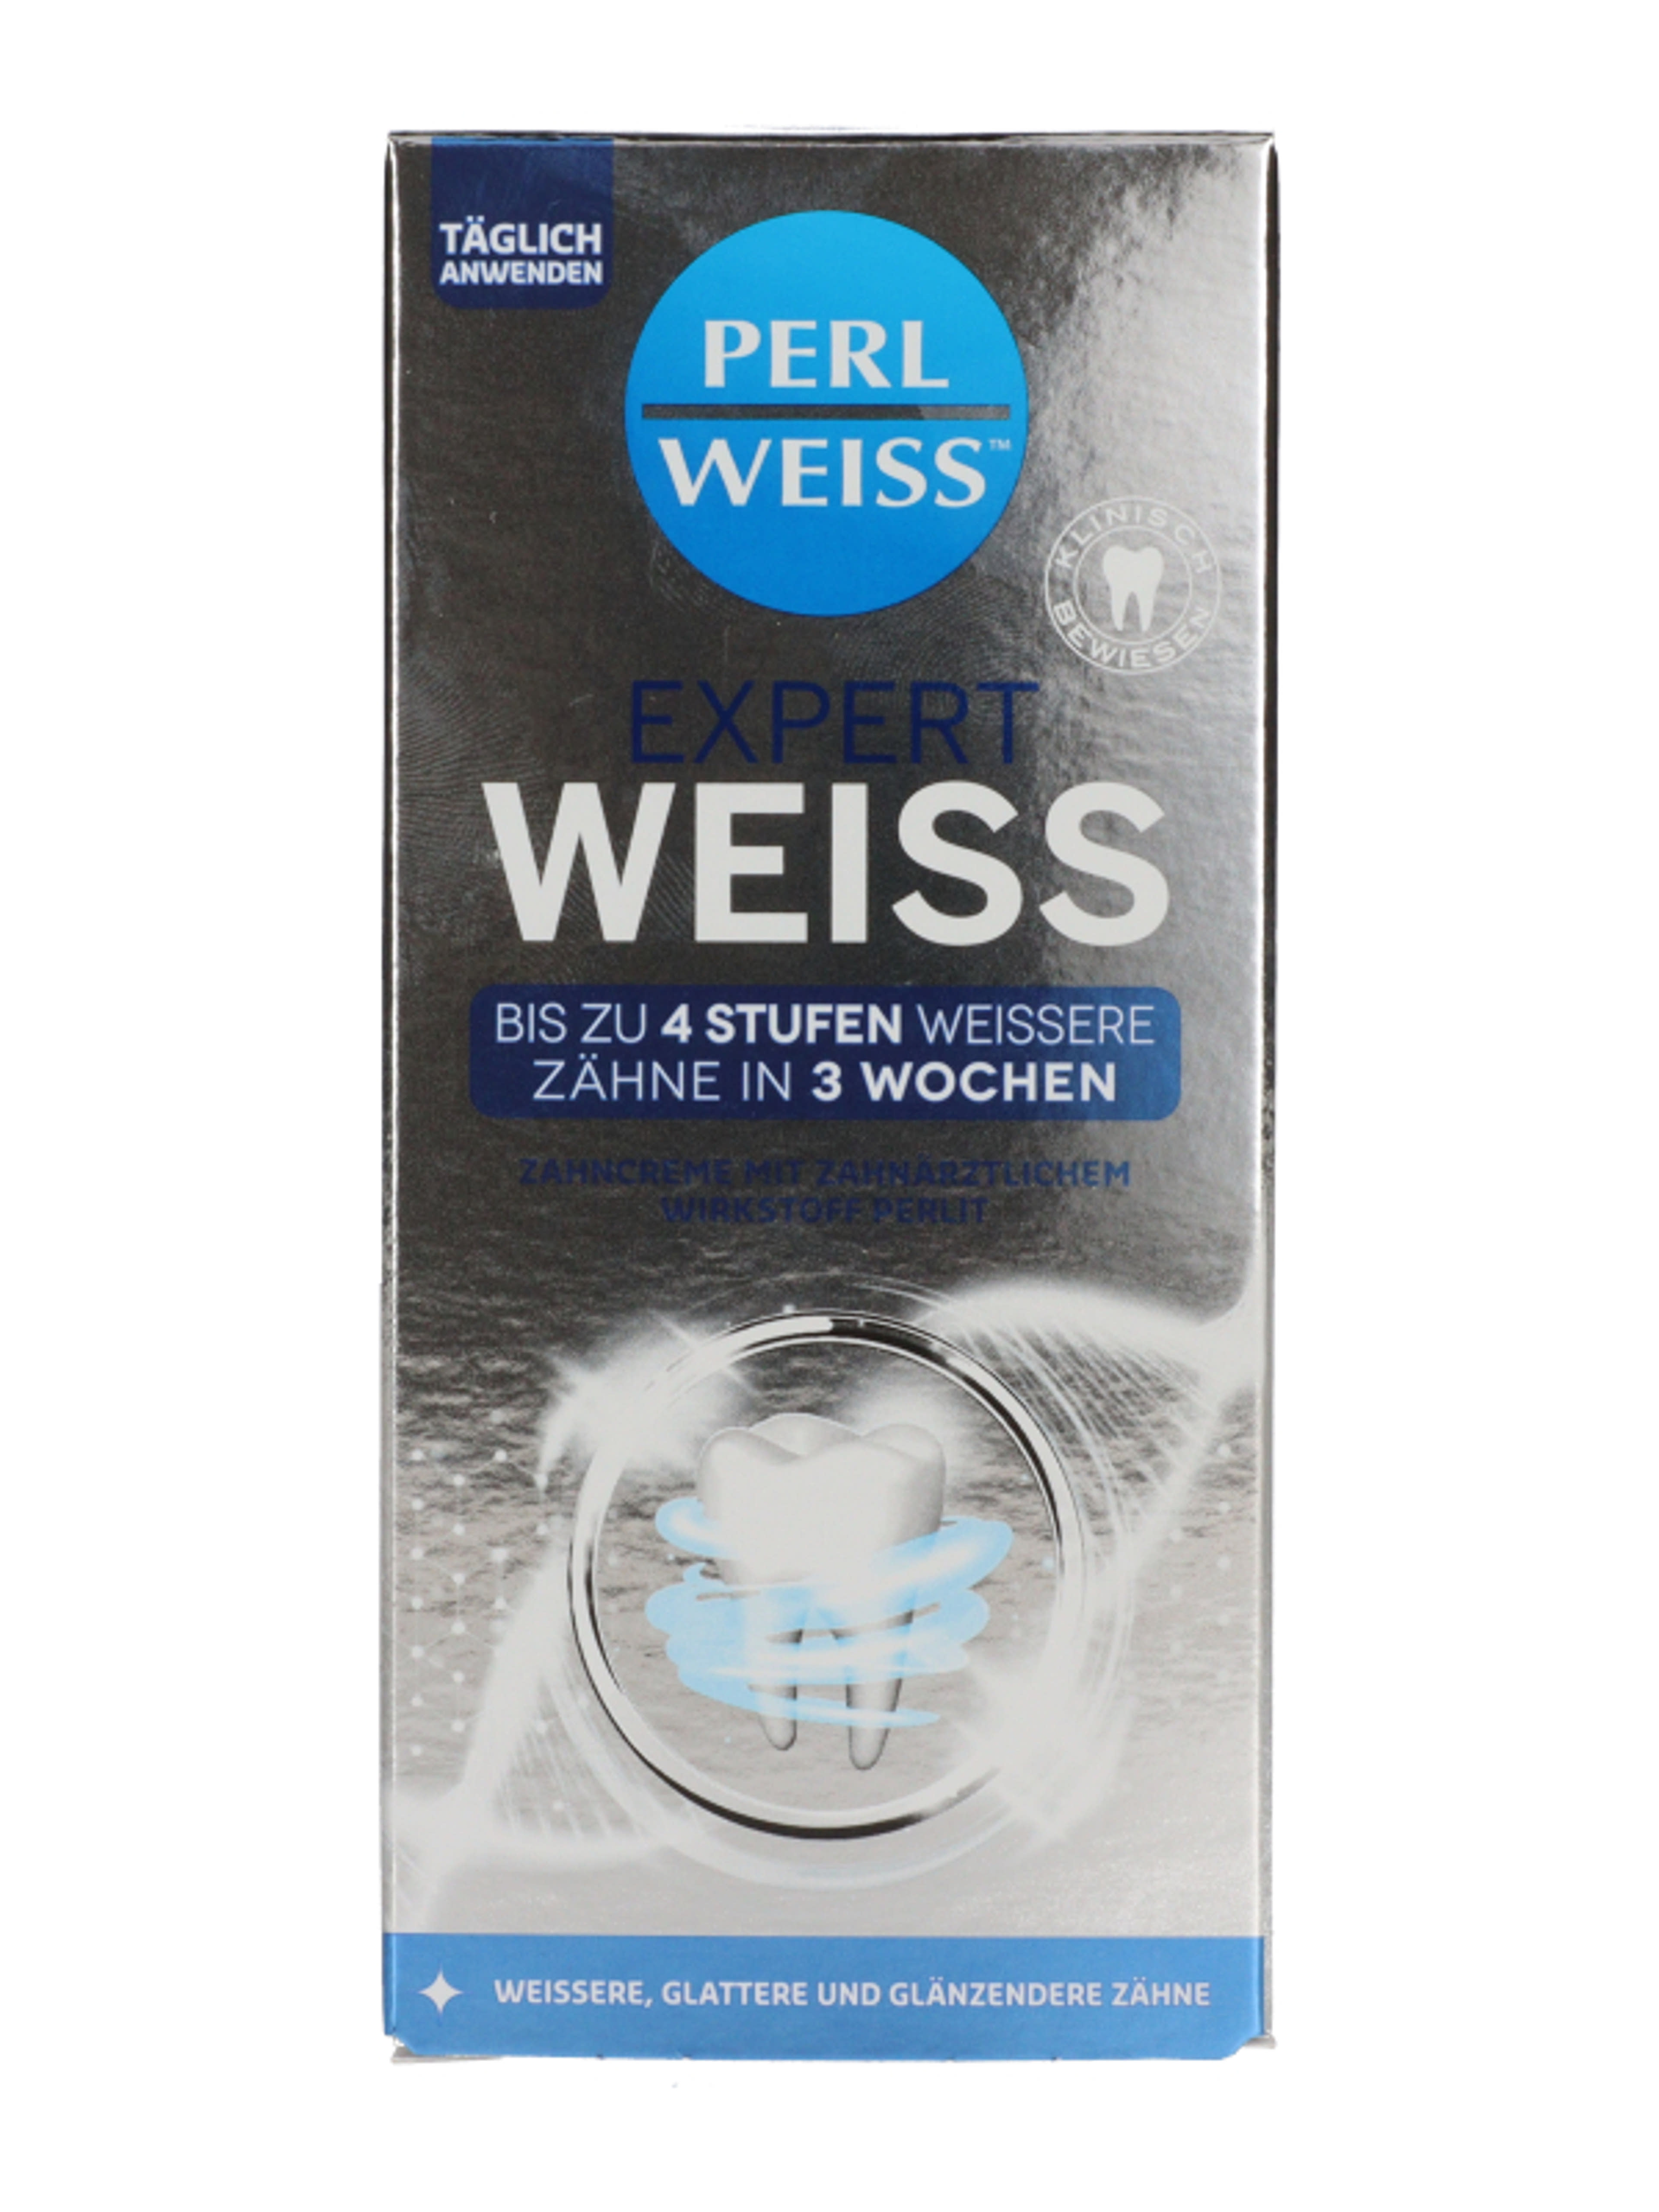 Perlweiss Expert Weiss fogfehérítő fogkrém - 50 ml